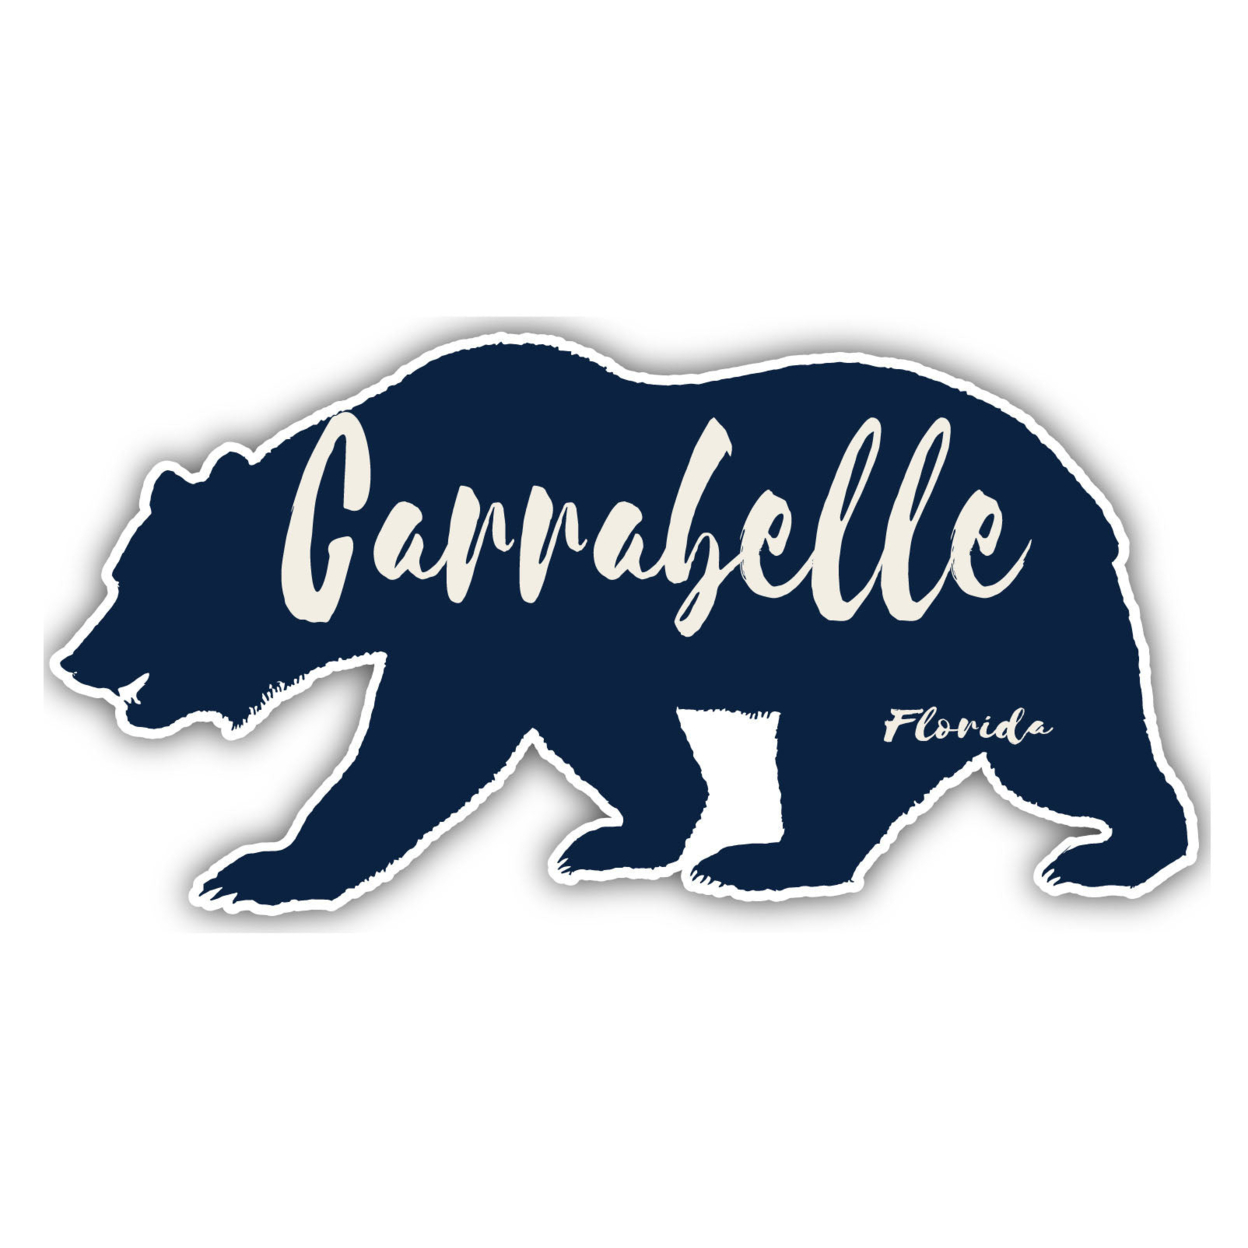 Carrabelle Florida Souvenir Decorative Stickers (Choose Theme And Size) - Single Unit, 4-Inch, Bear